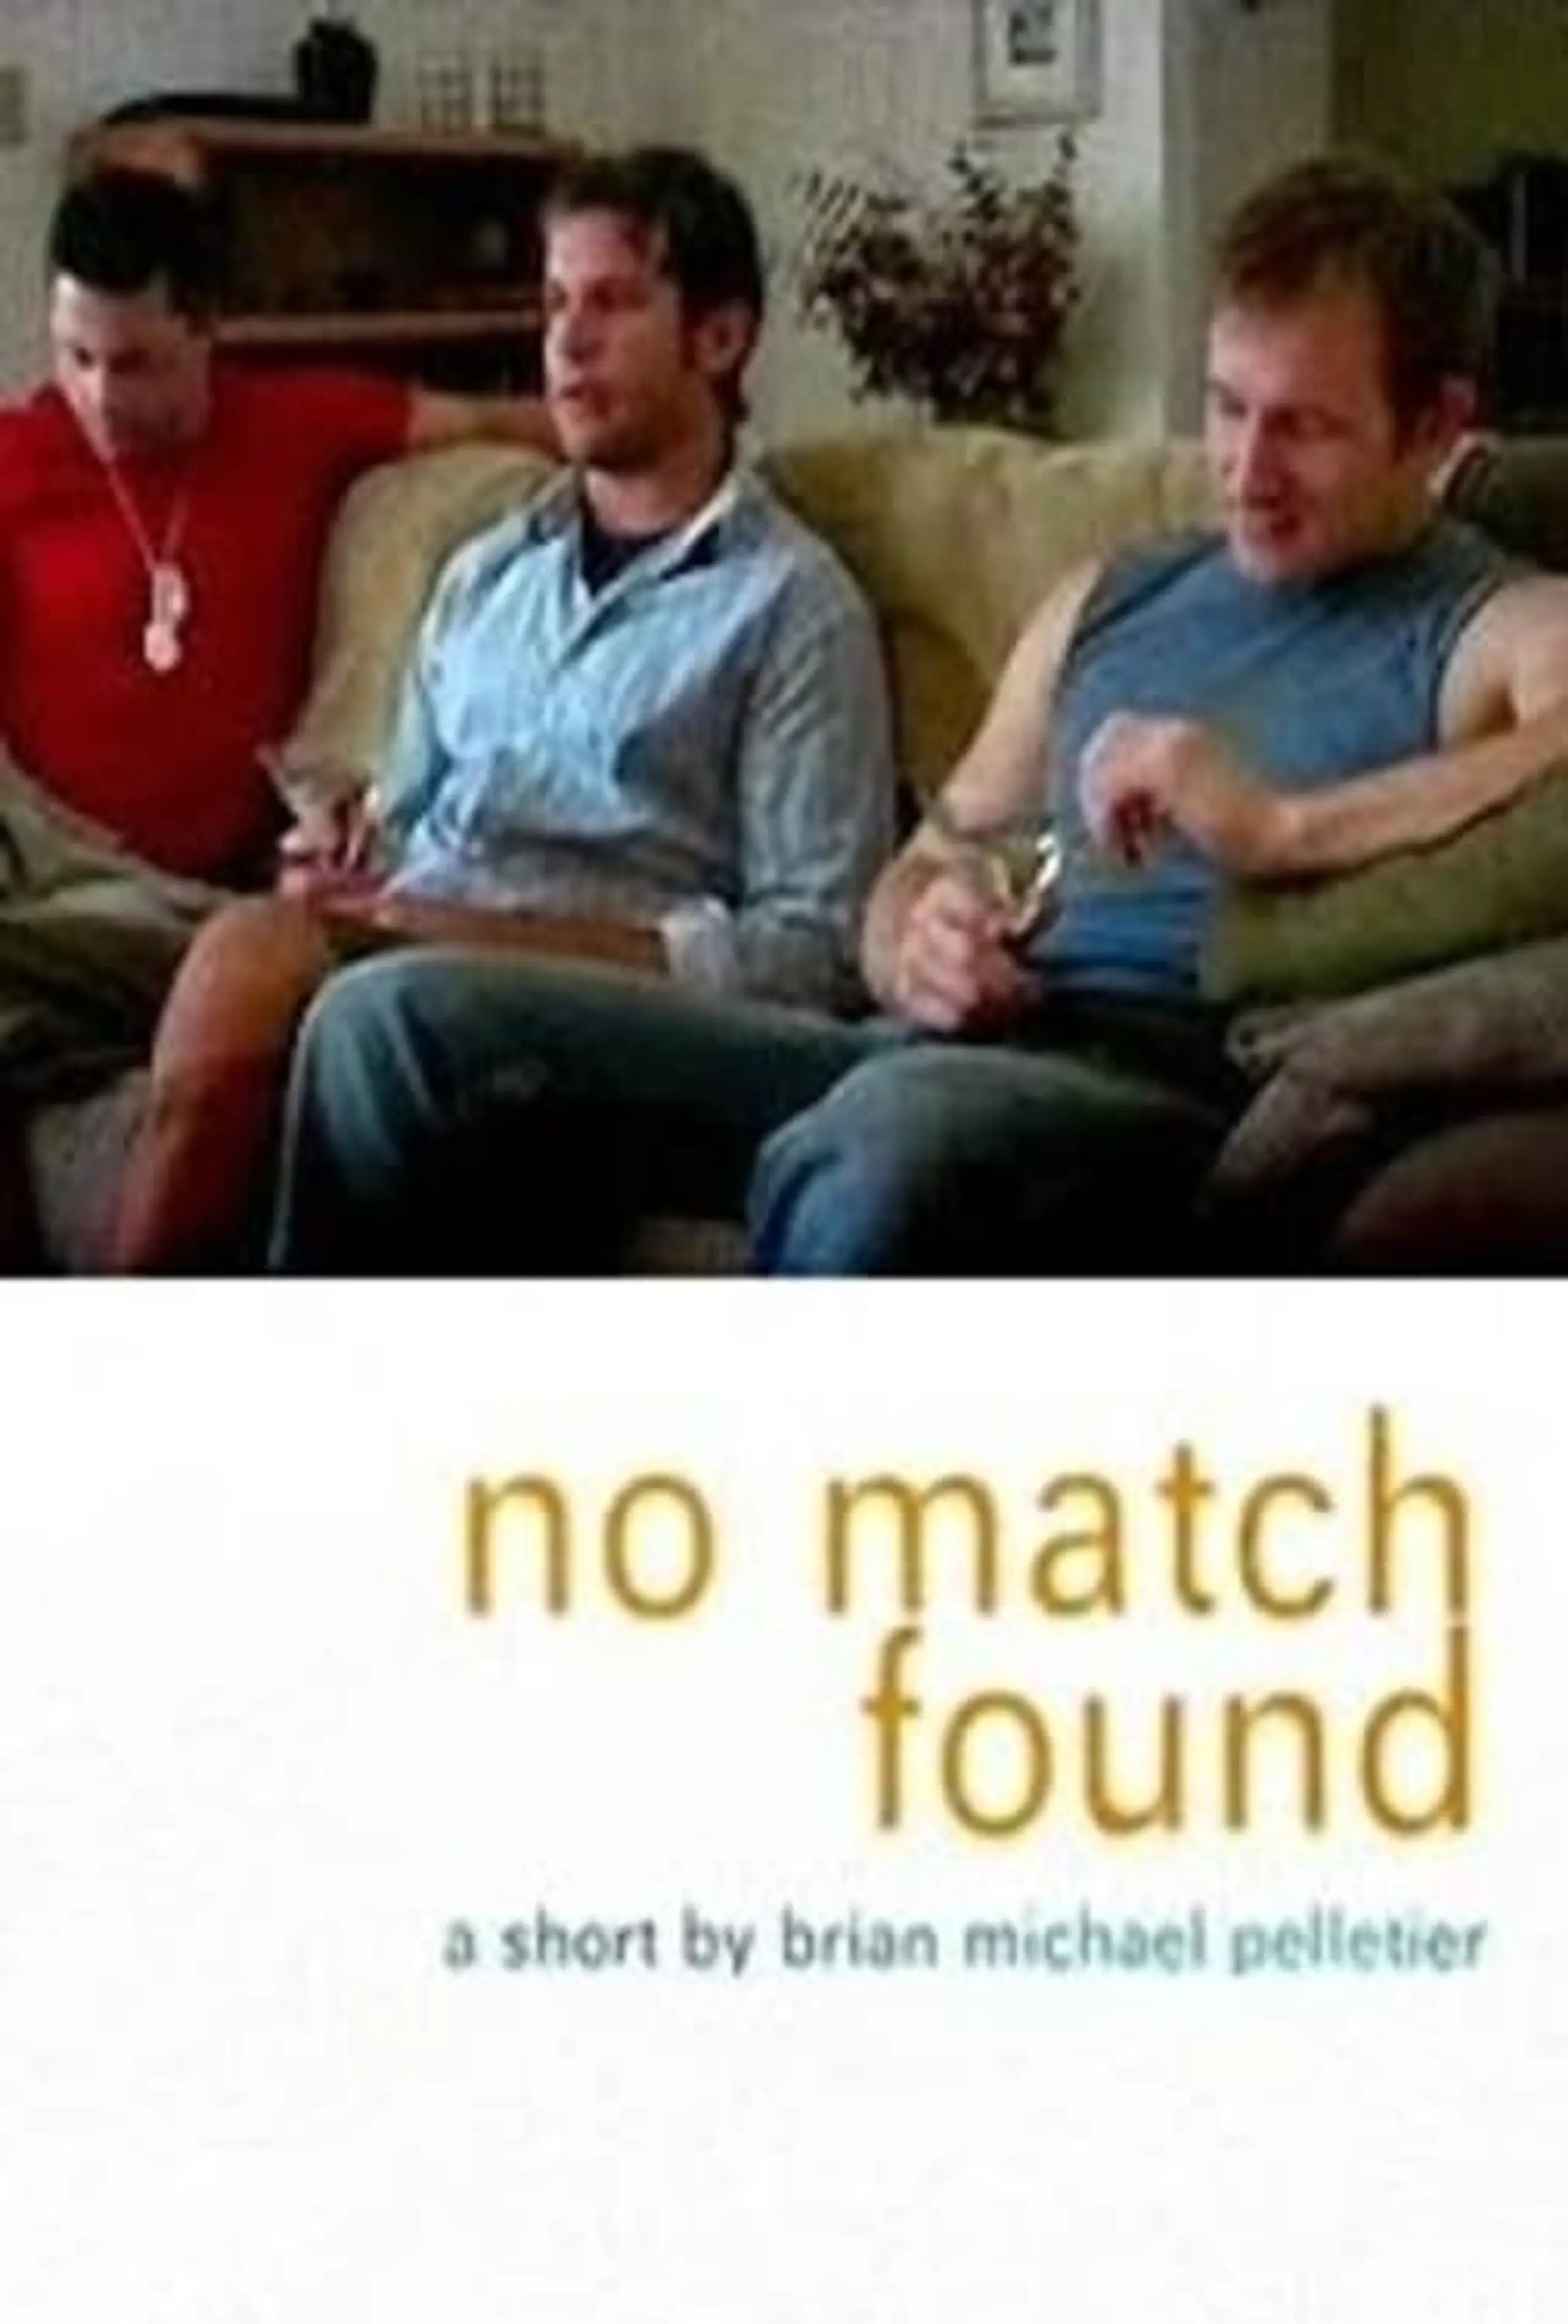 No Match Found